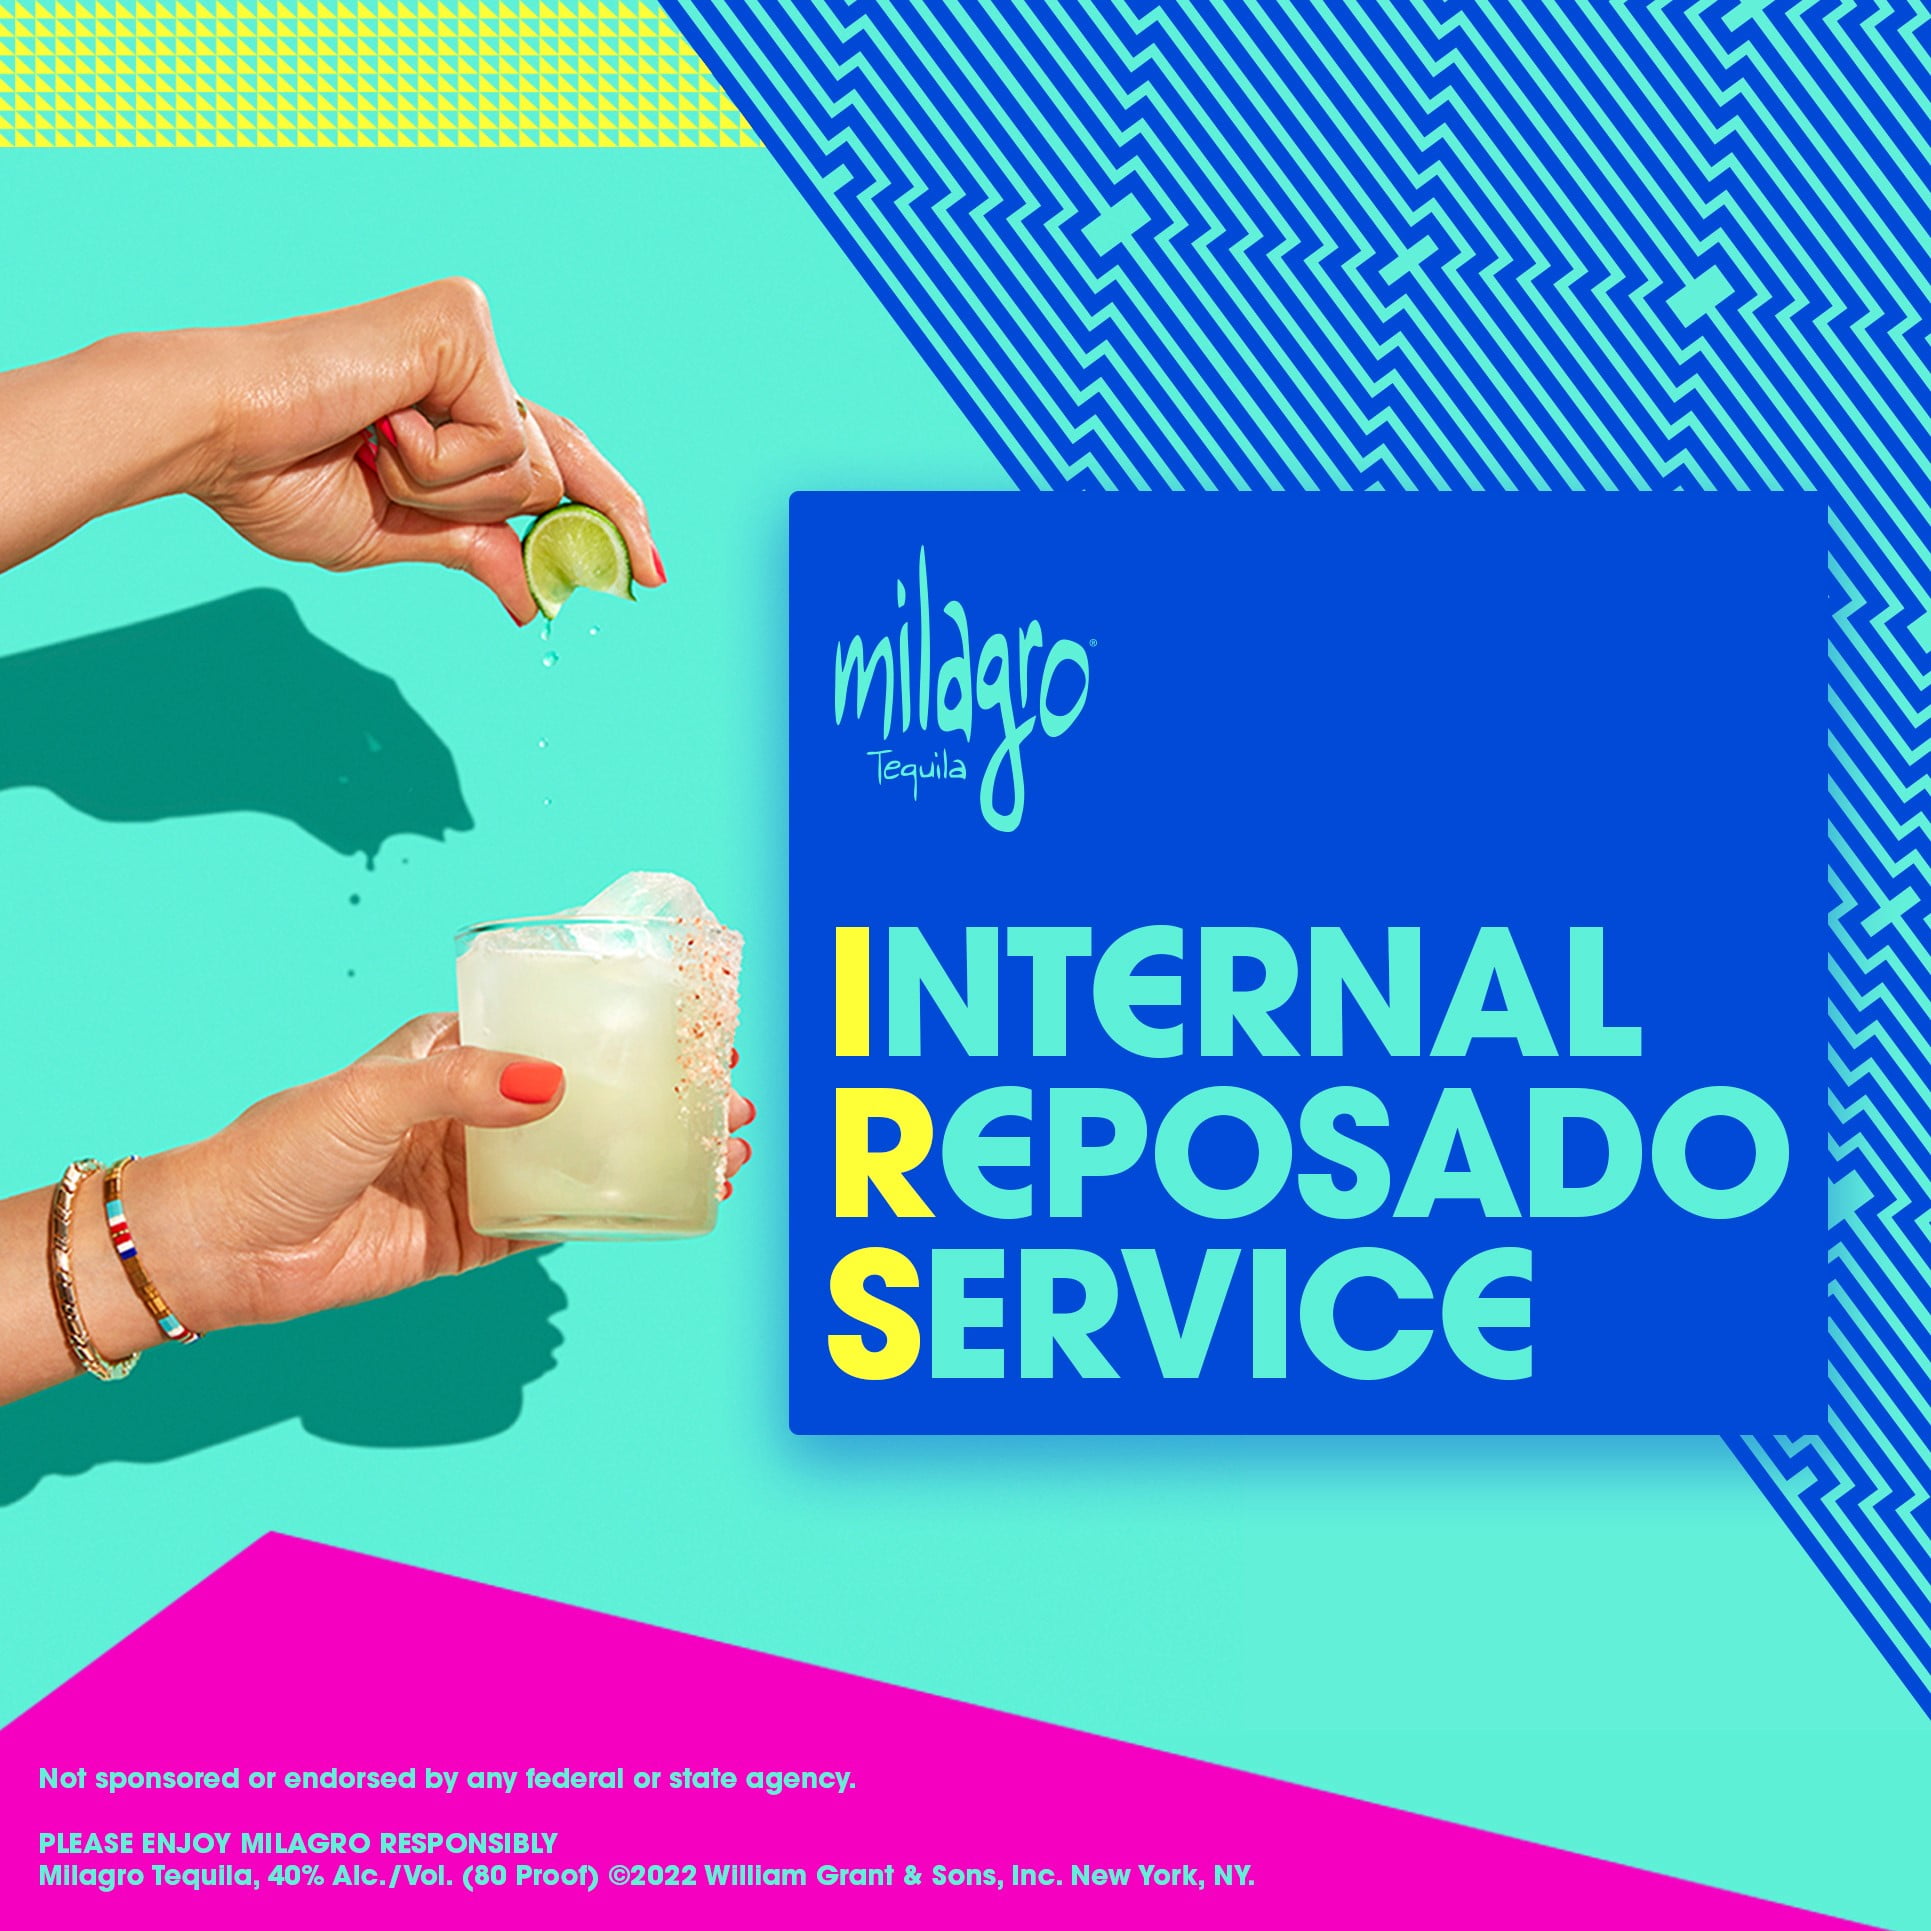 Milagro Tequila graphic stating "Internal Reposado Service" via Sidney Dizon (M&C Saatchi) for use by 360 Magazine